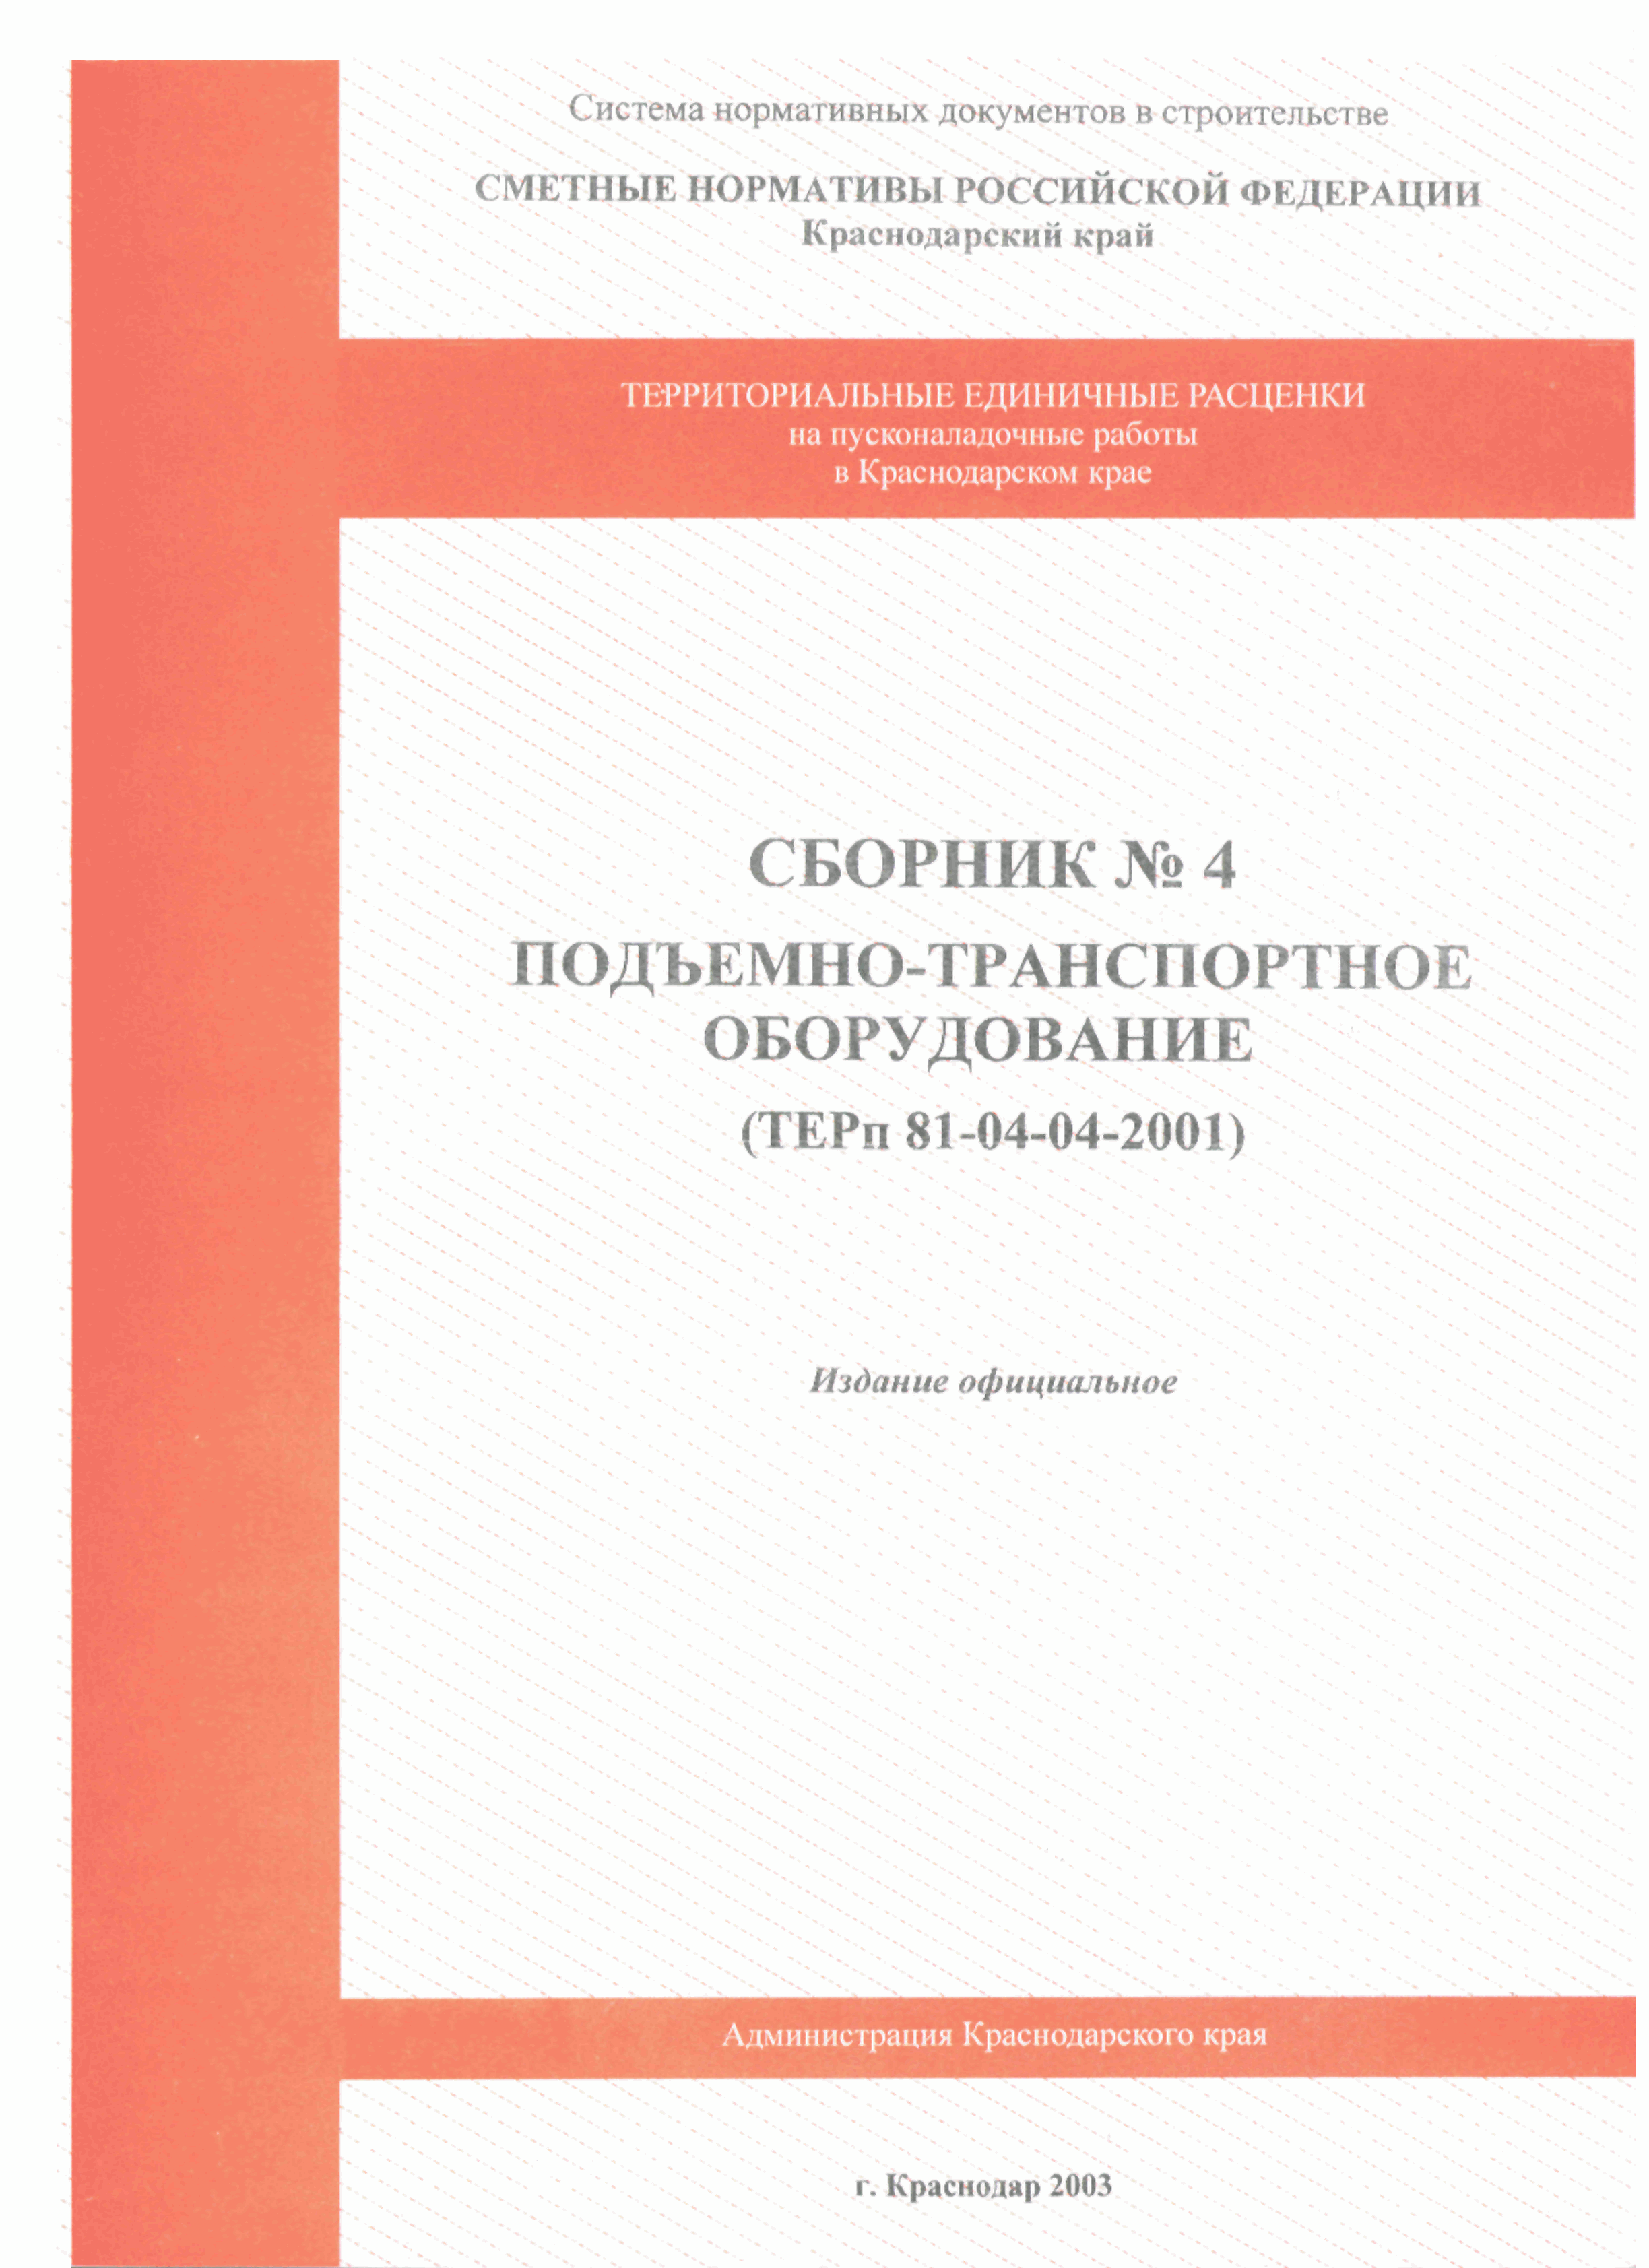 ТЕРп Краснодарский край 2001-04